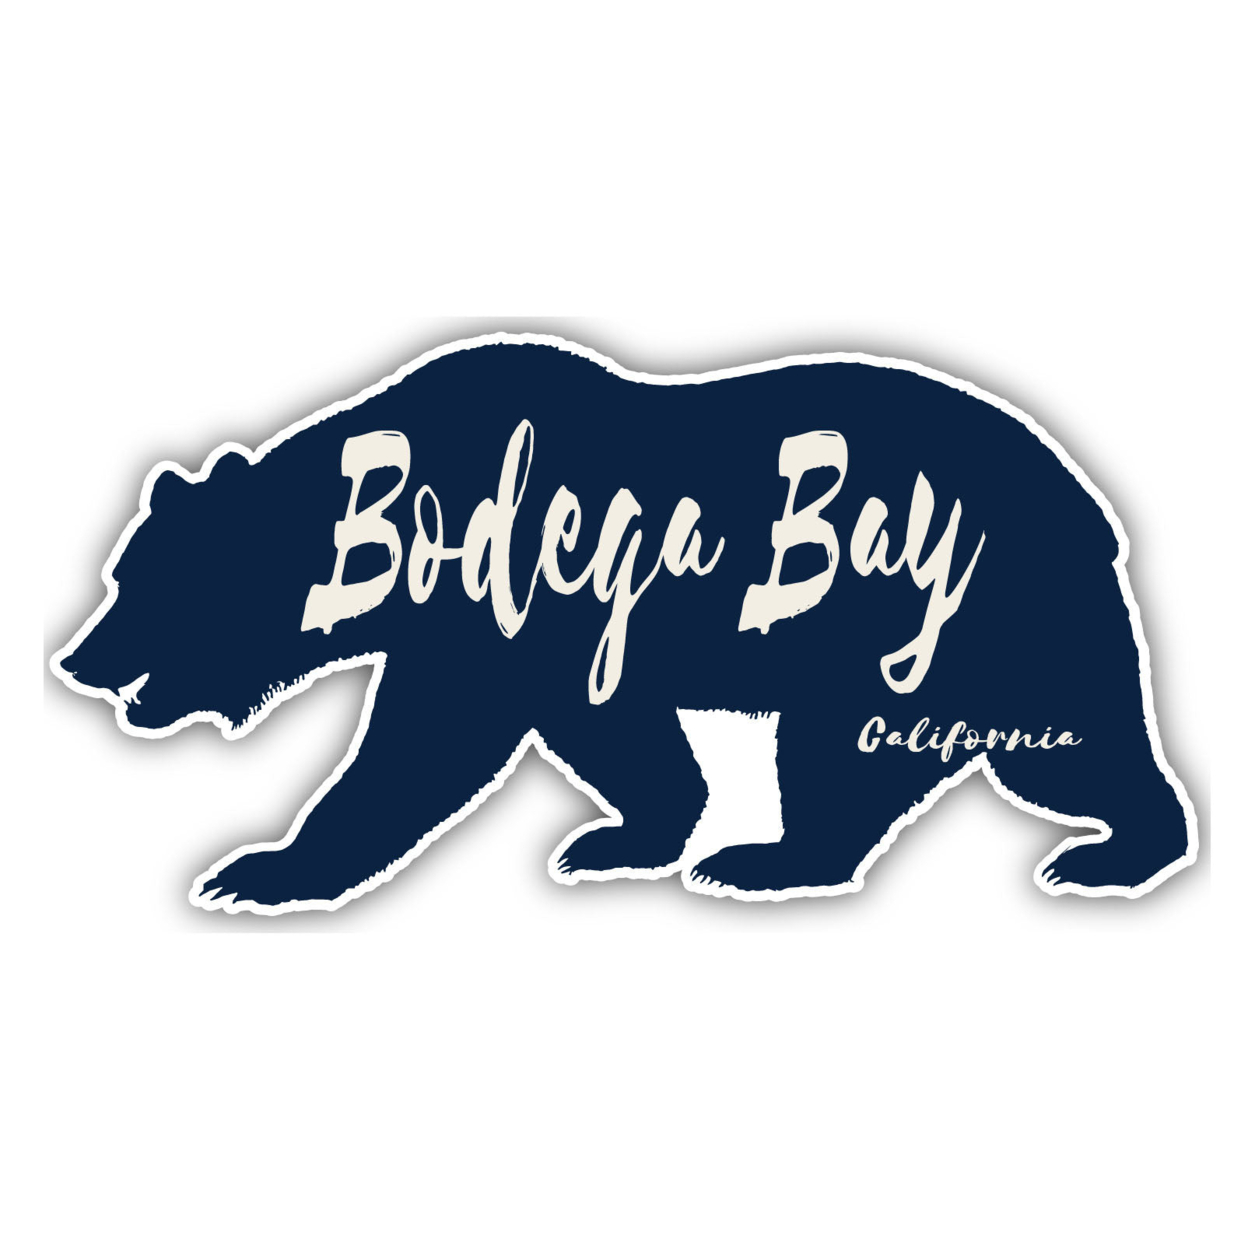 Bodega Bay California Souvenir Decorative Stickers (Choose Theme And Size) - Single Unit, 8-Inch, Tent